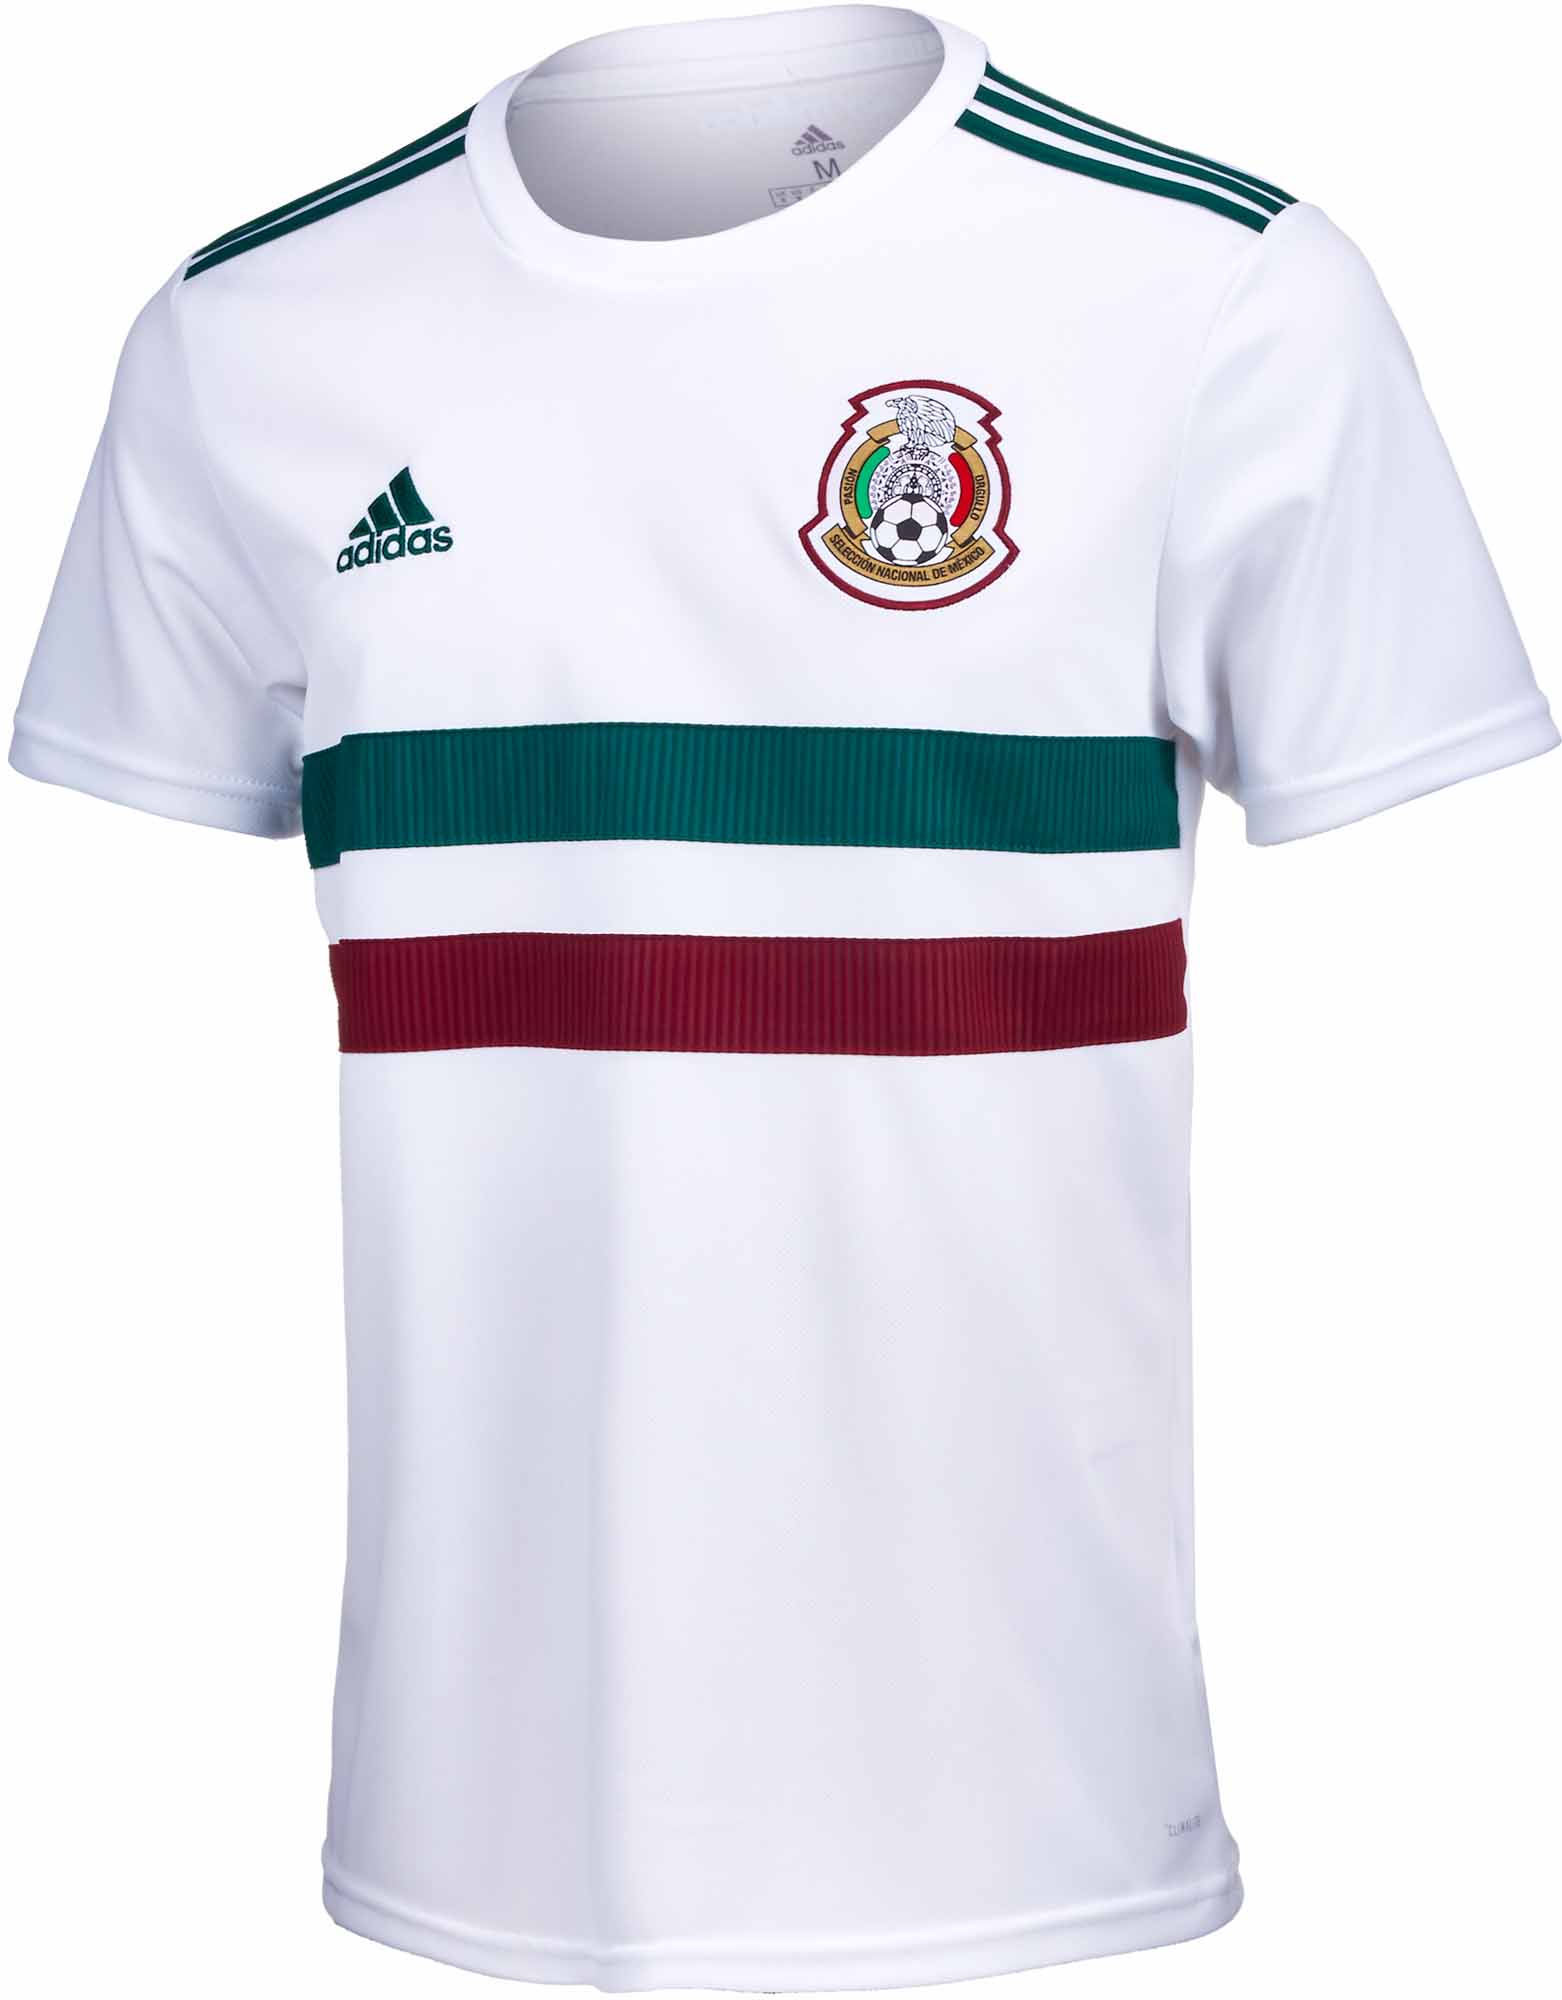 adidas Mexico Away Jersey 201819